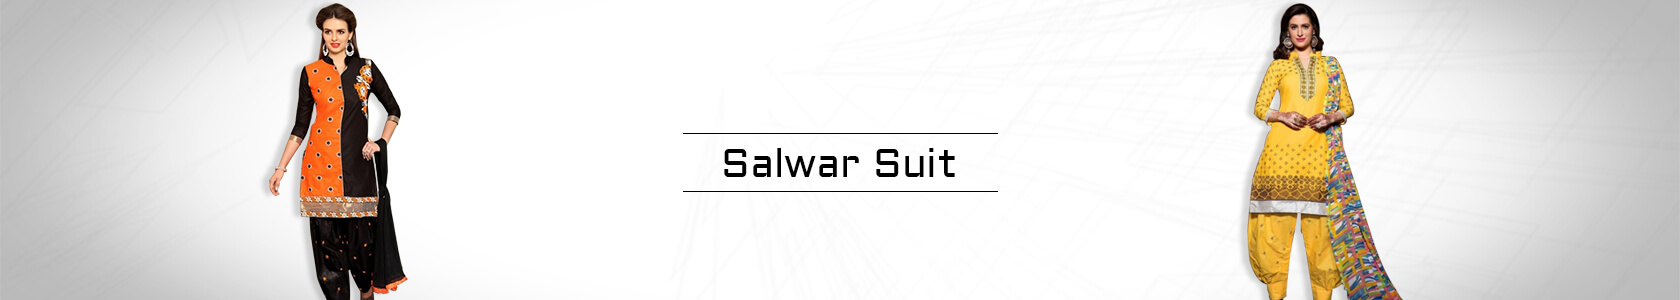 Salwar Suit